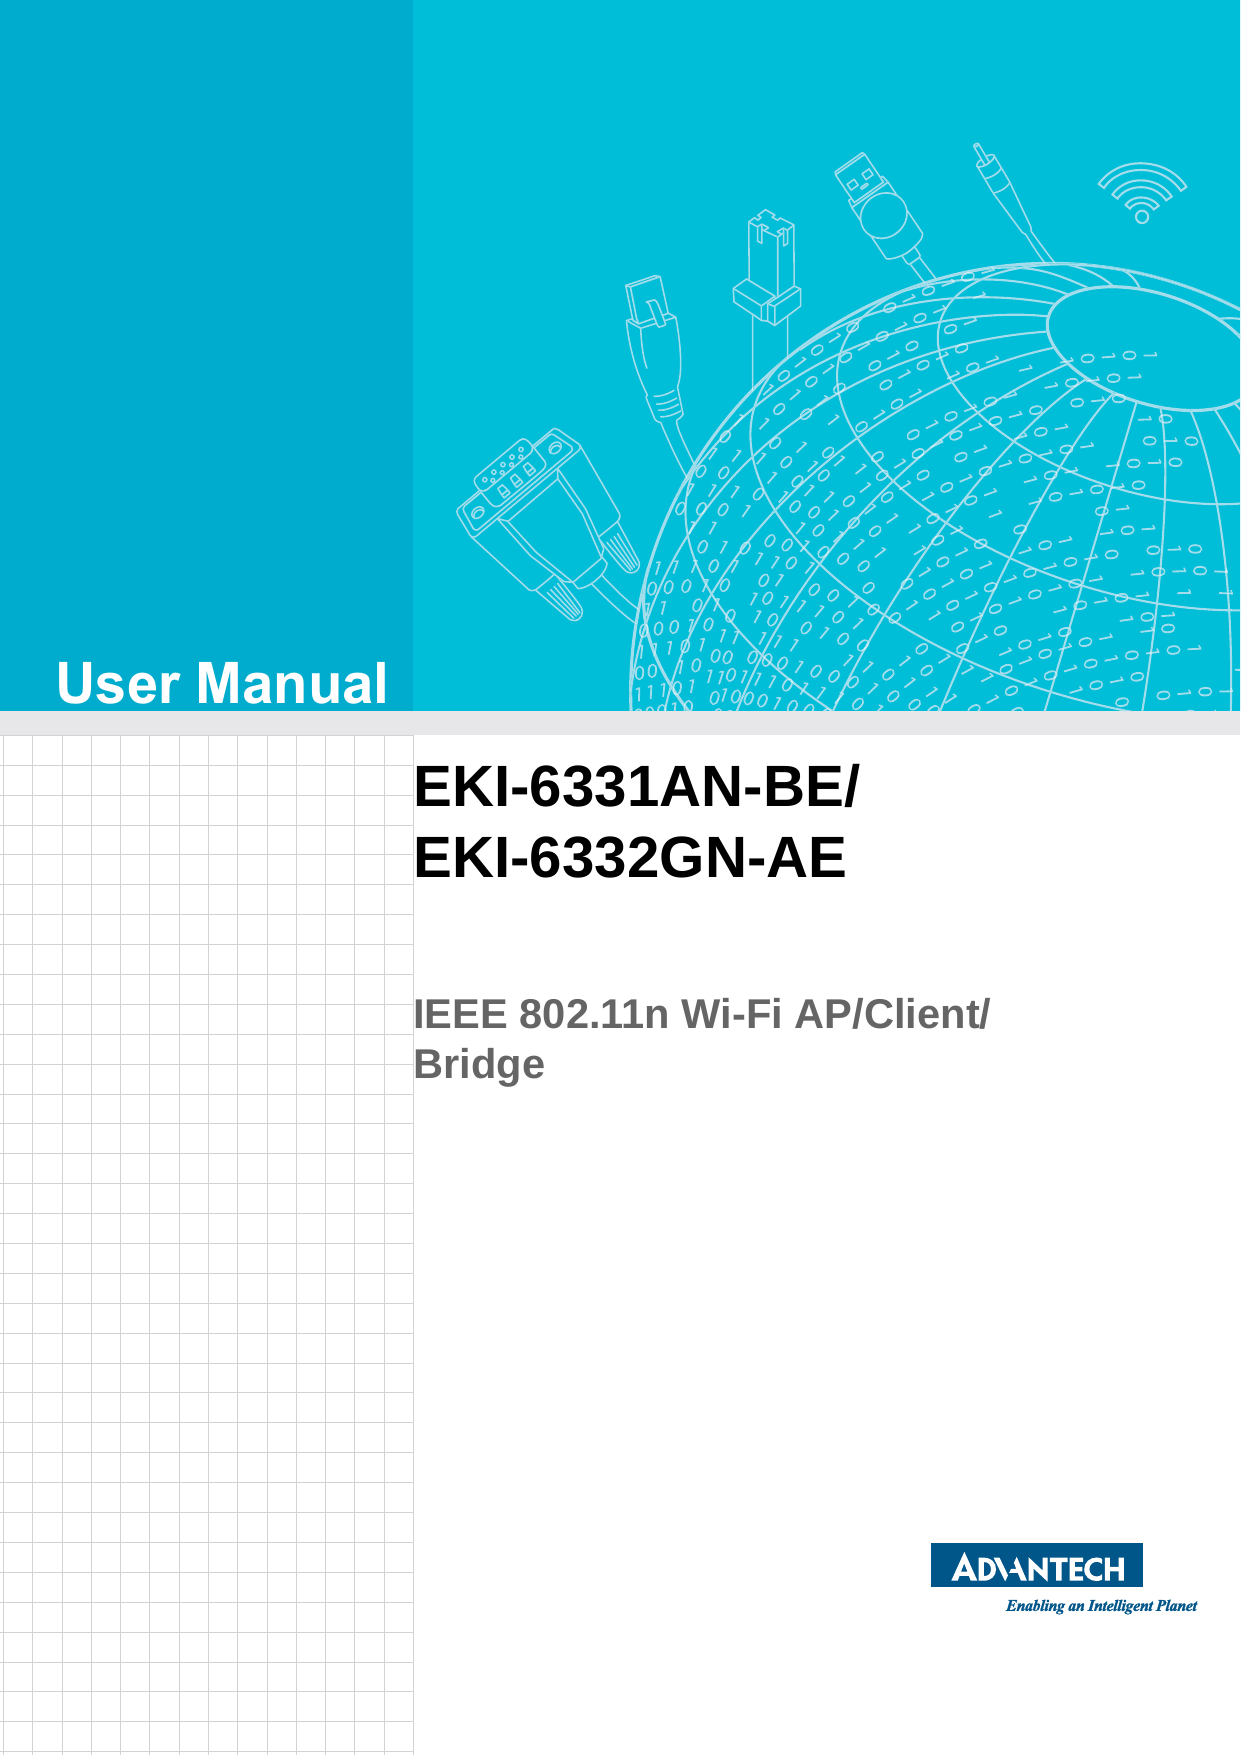 User ManualEKI-6331AN-BE/EKI-6332GN-AEIEEE 802.11n Wi-Fi AP/Client/Bridge